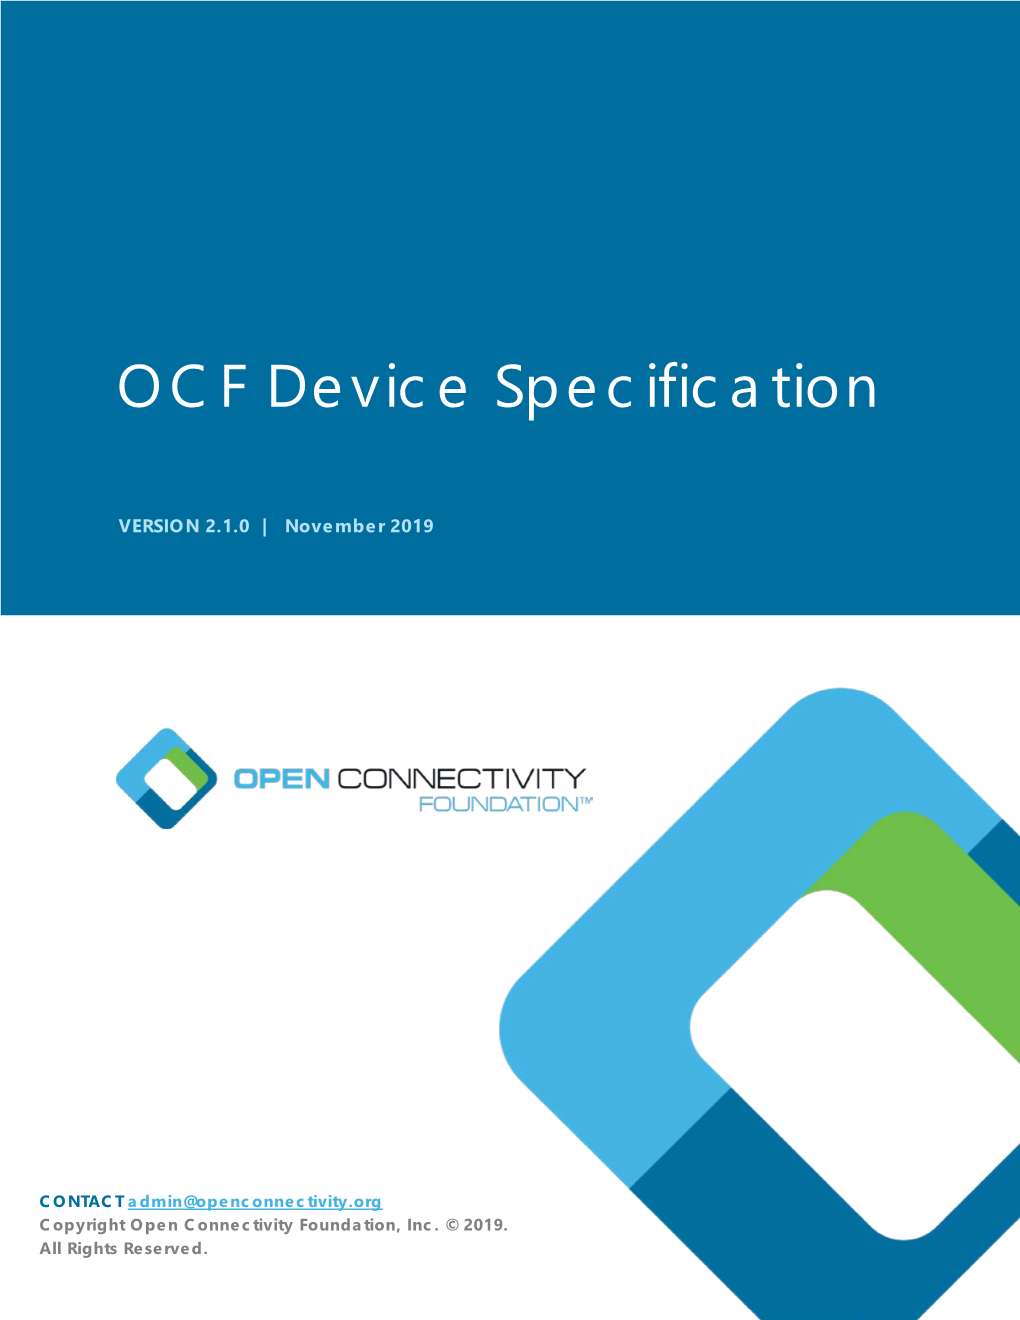 OCF Device Specification